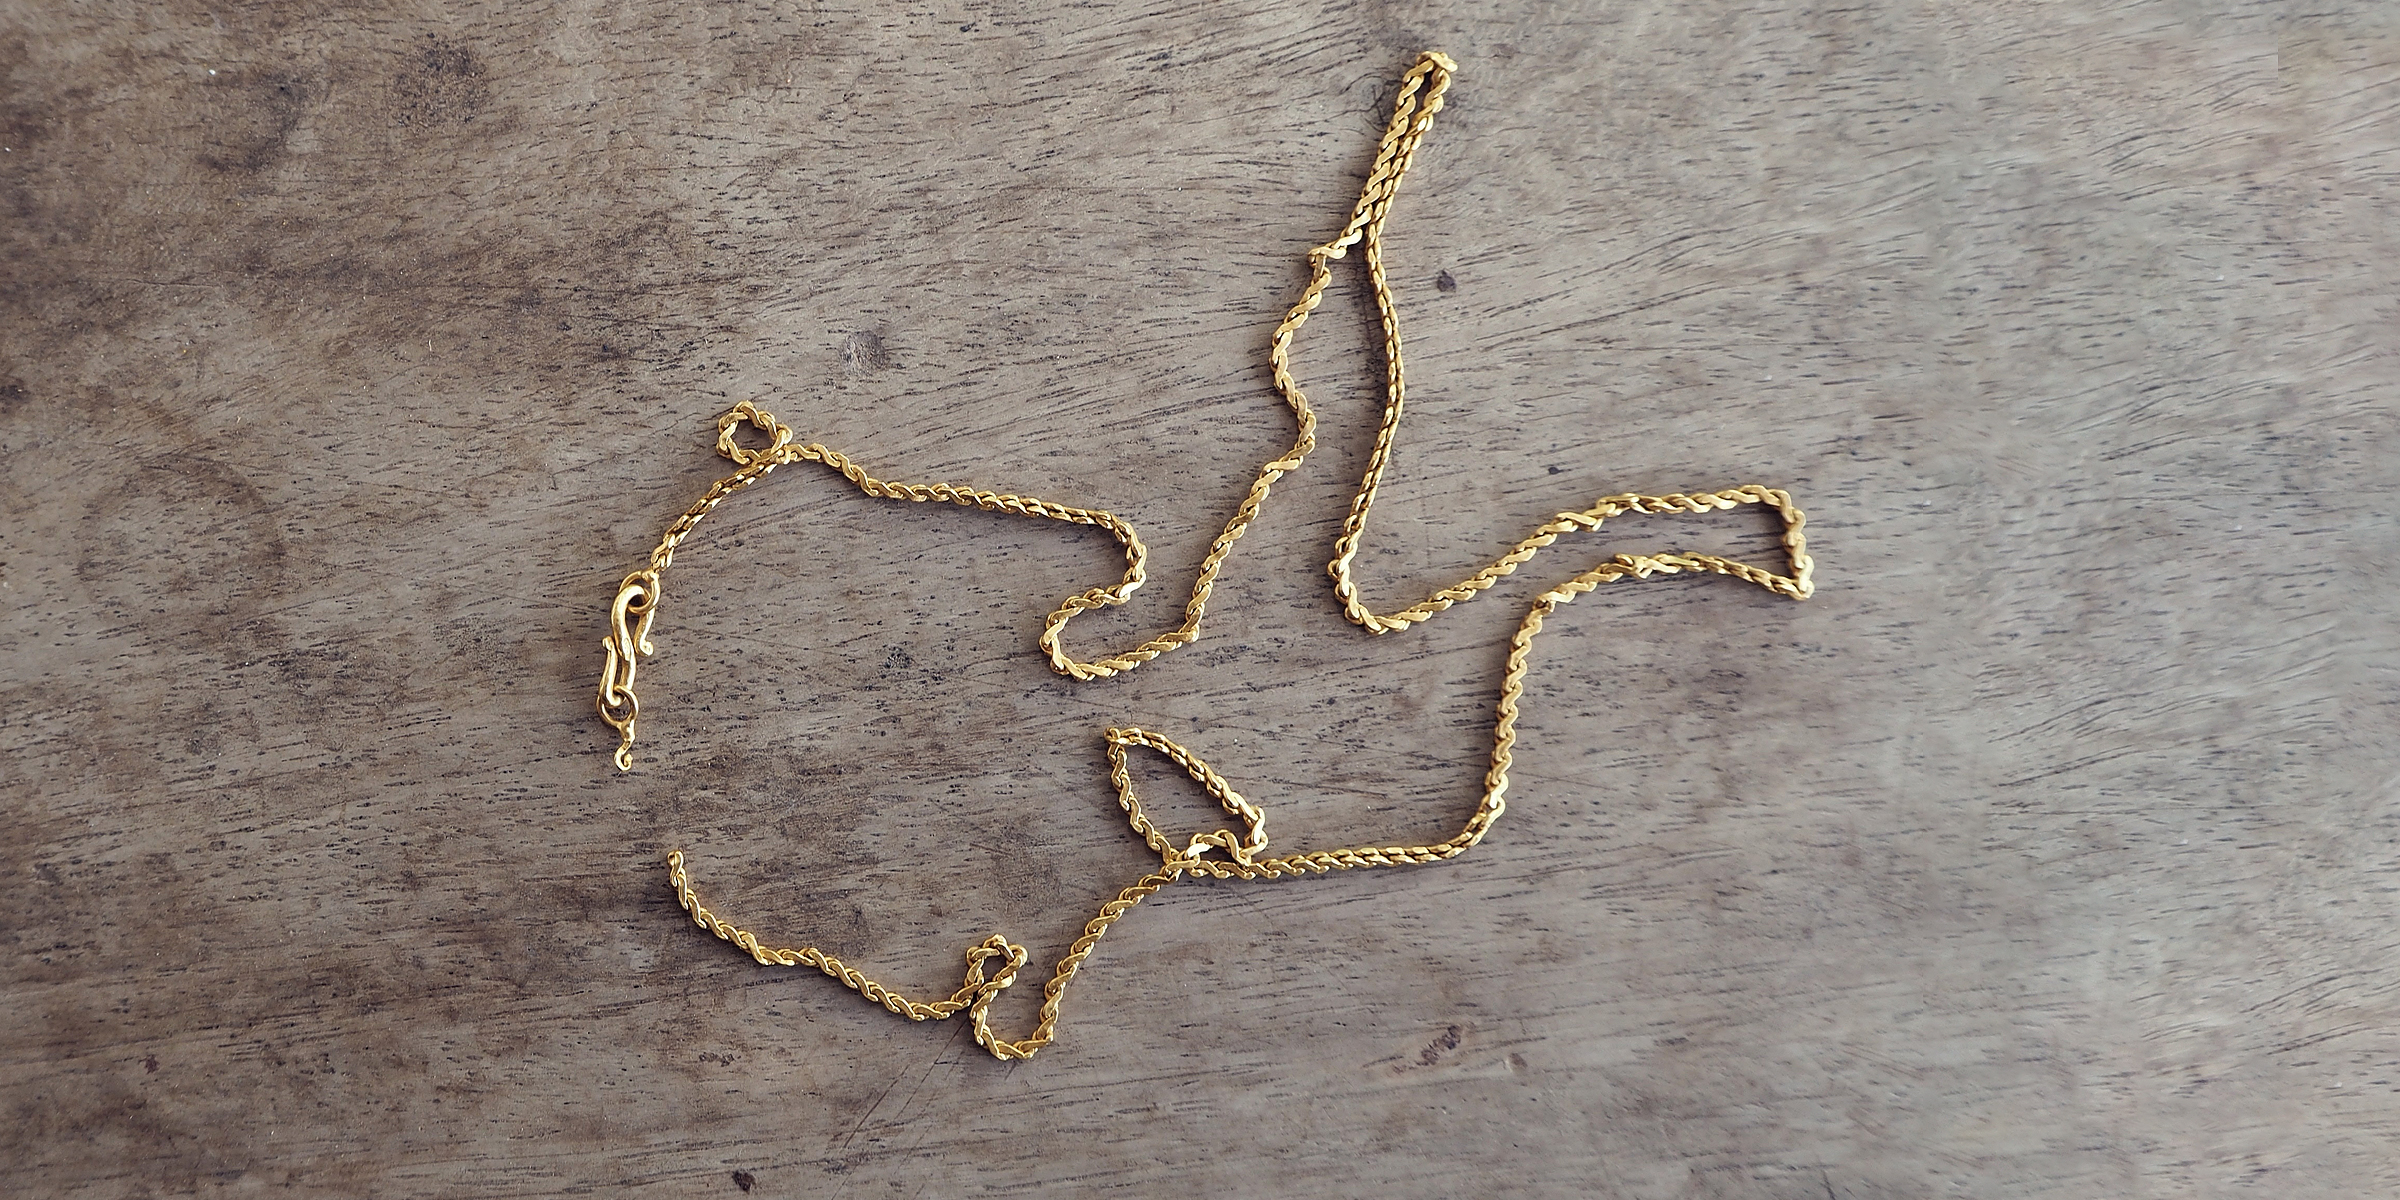 A broken necklace chain | Source: Shutterstock